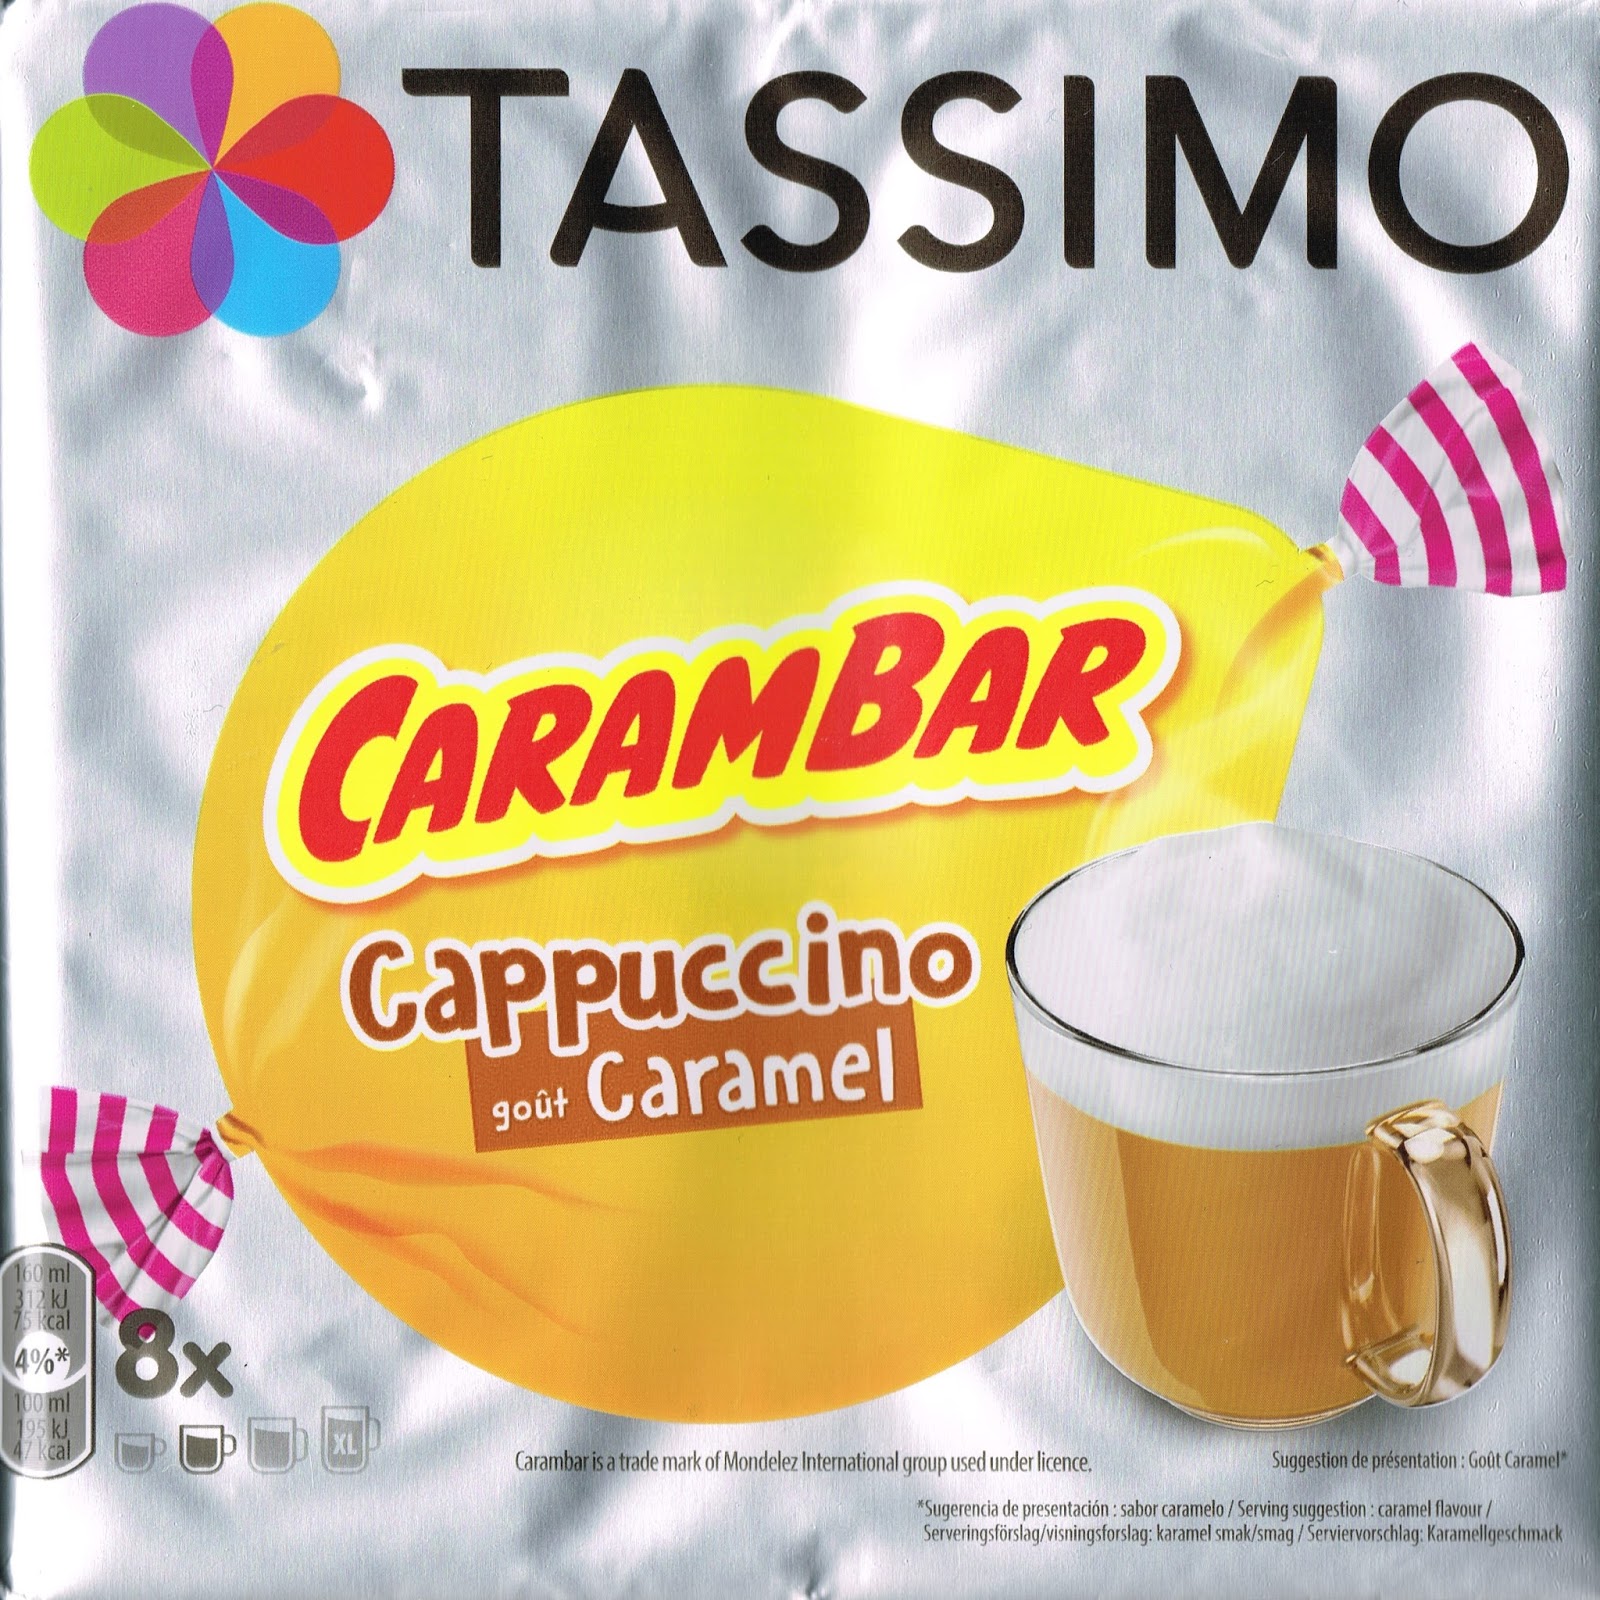 capsules-et-dosettes: Tassimo : Carambar Cappuccino goût caramel